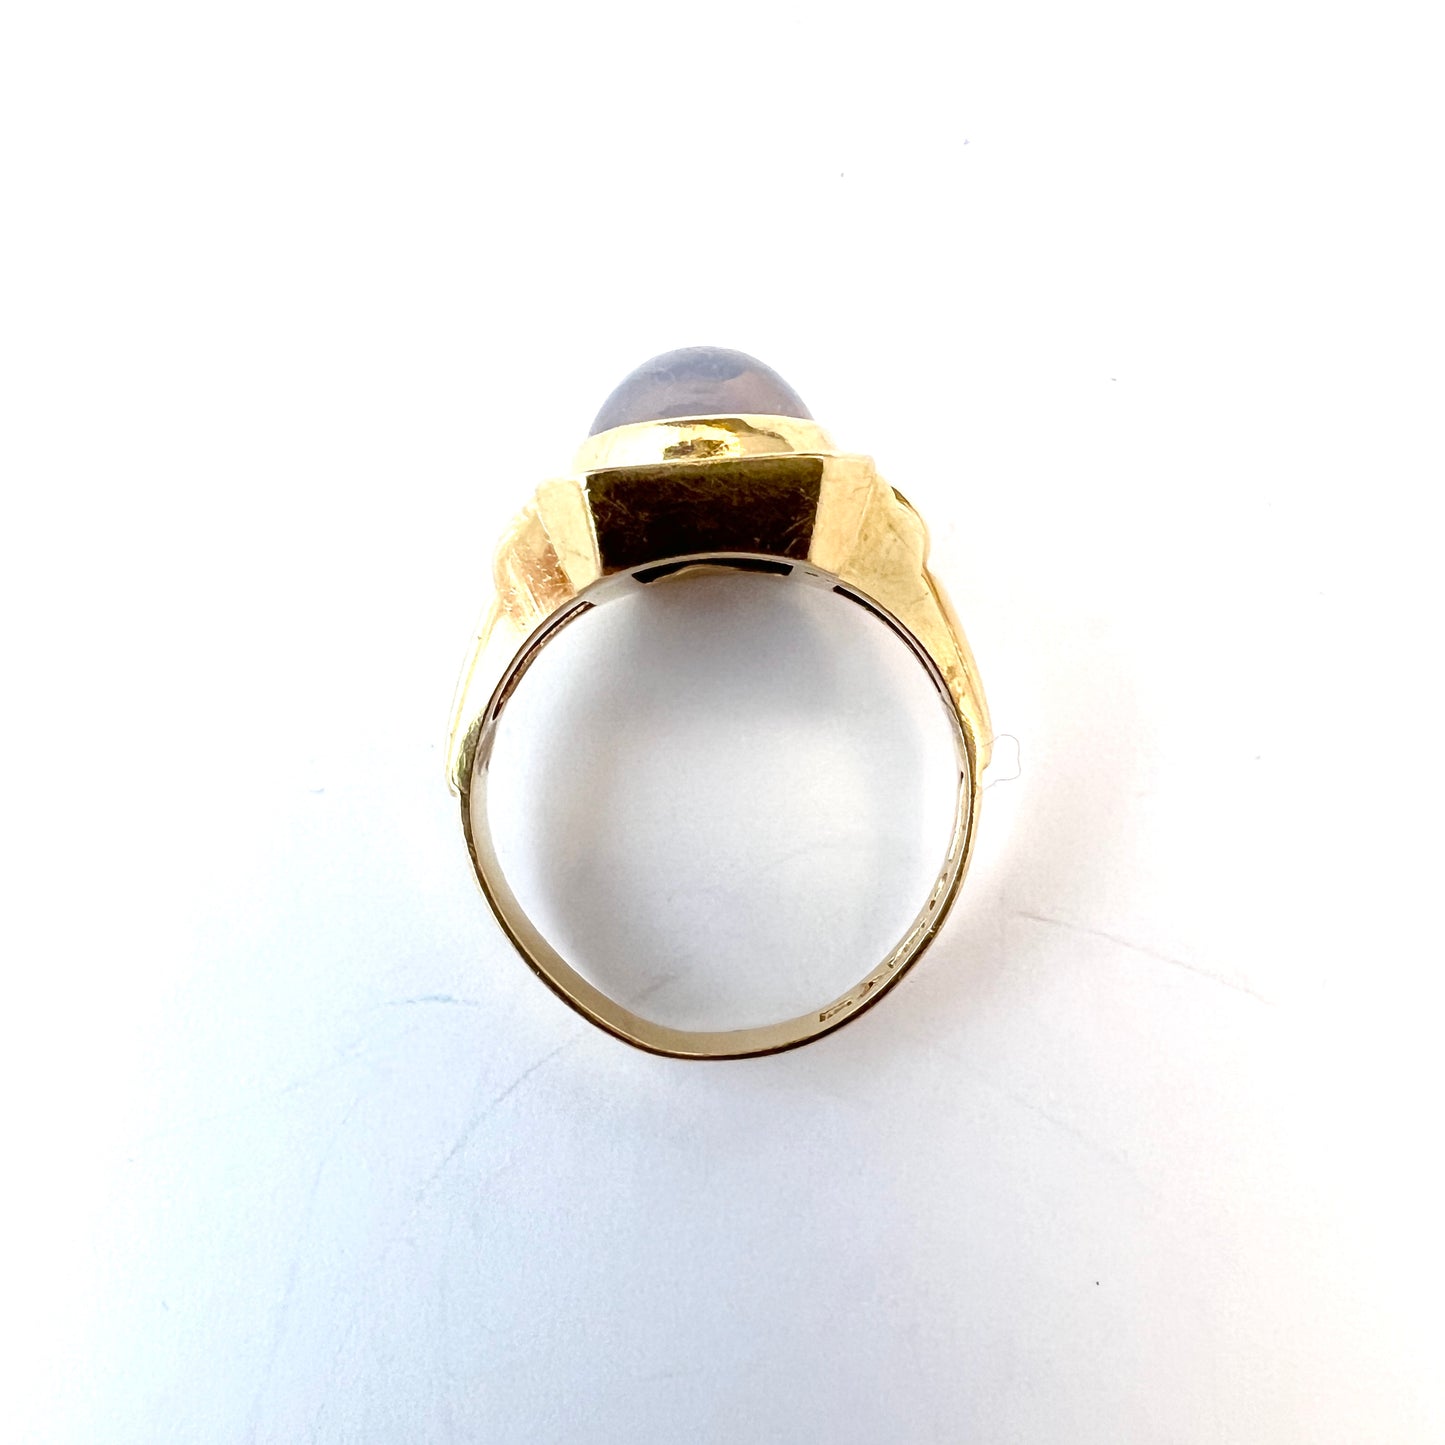 Ceson, Sweden 1955. Vintage Mid-century Modern. 18k Gold Moonstone Ring.